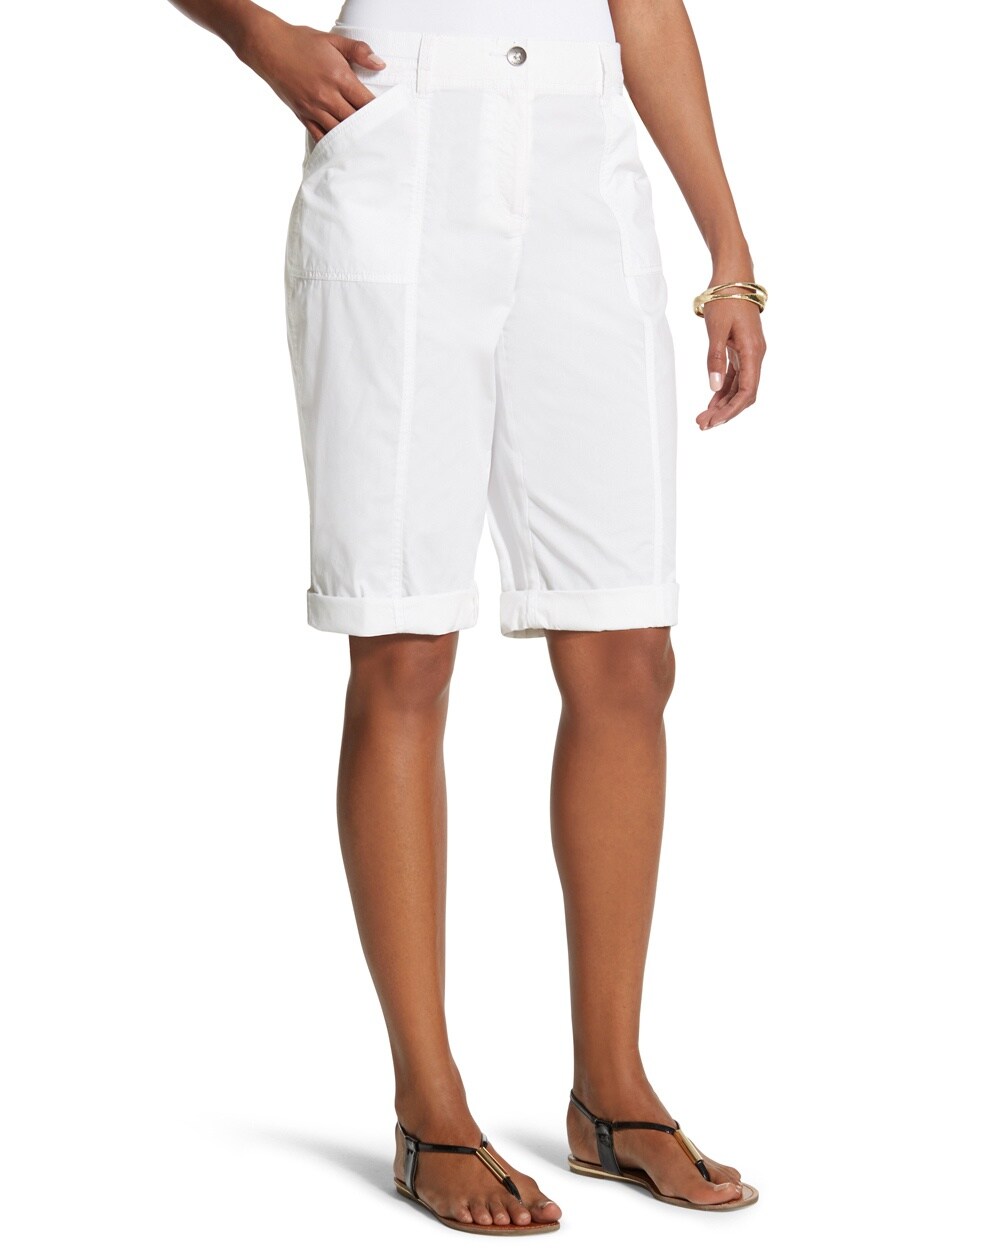 Cool Cotton Shorts - 13-inch inseam - Chico's